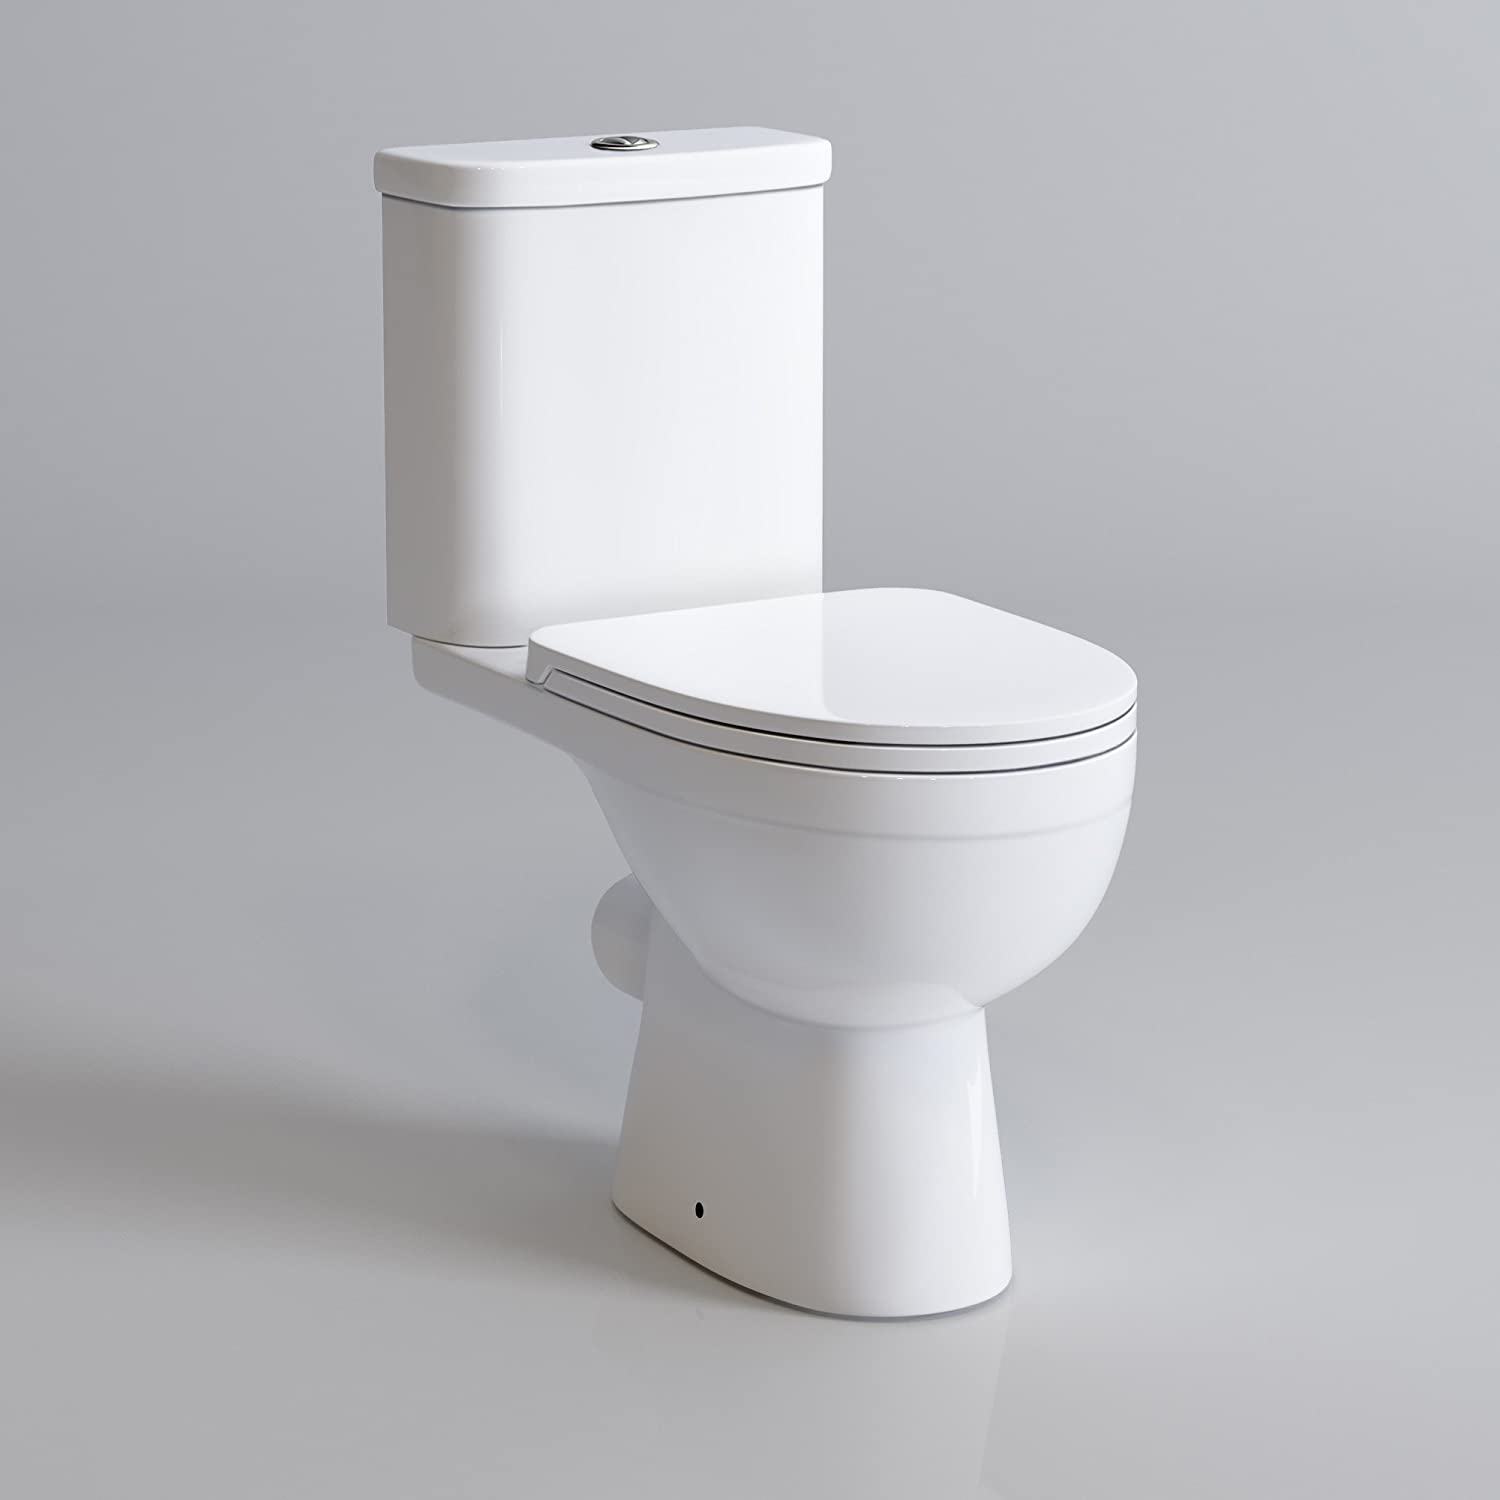 Bathroom Combination Unit - (Toilet, Seat, Vanity Unit and Basin) - Gloss White